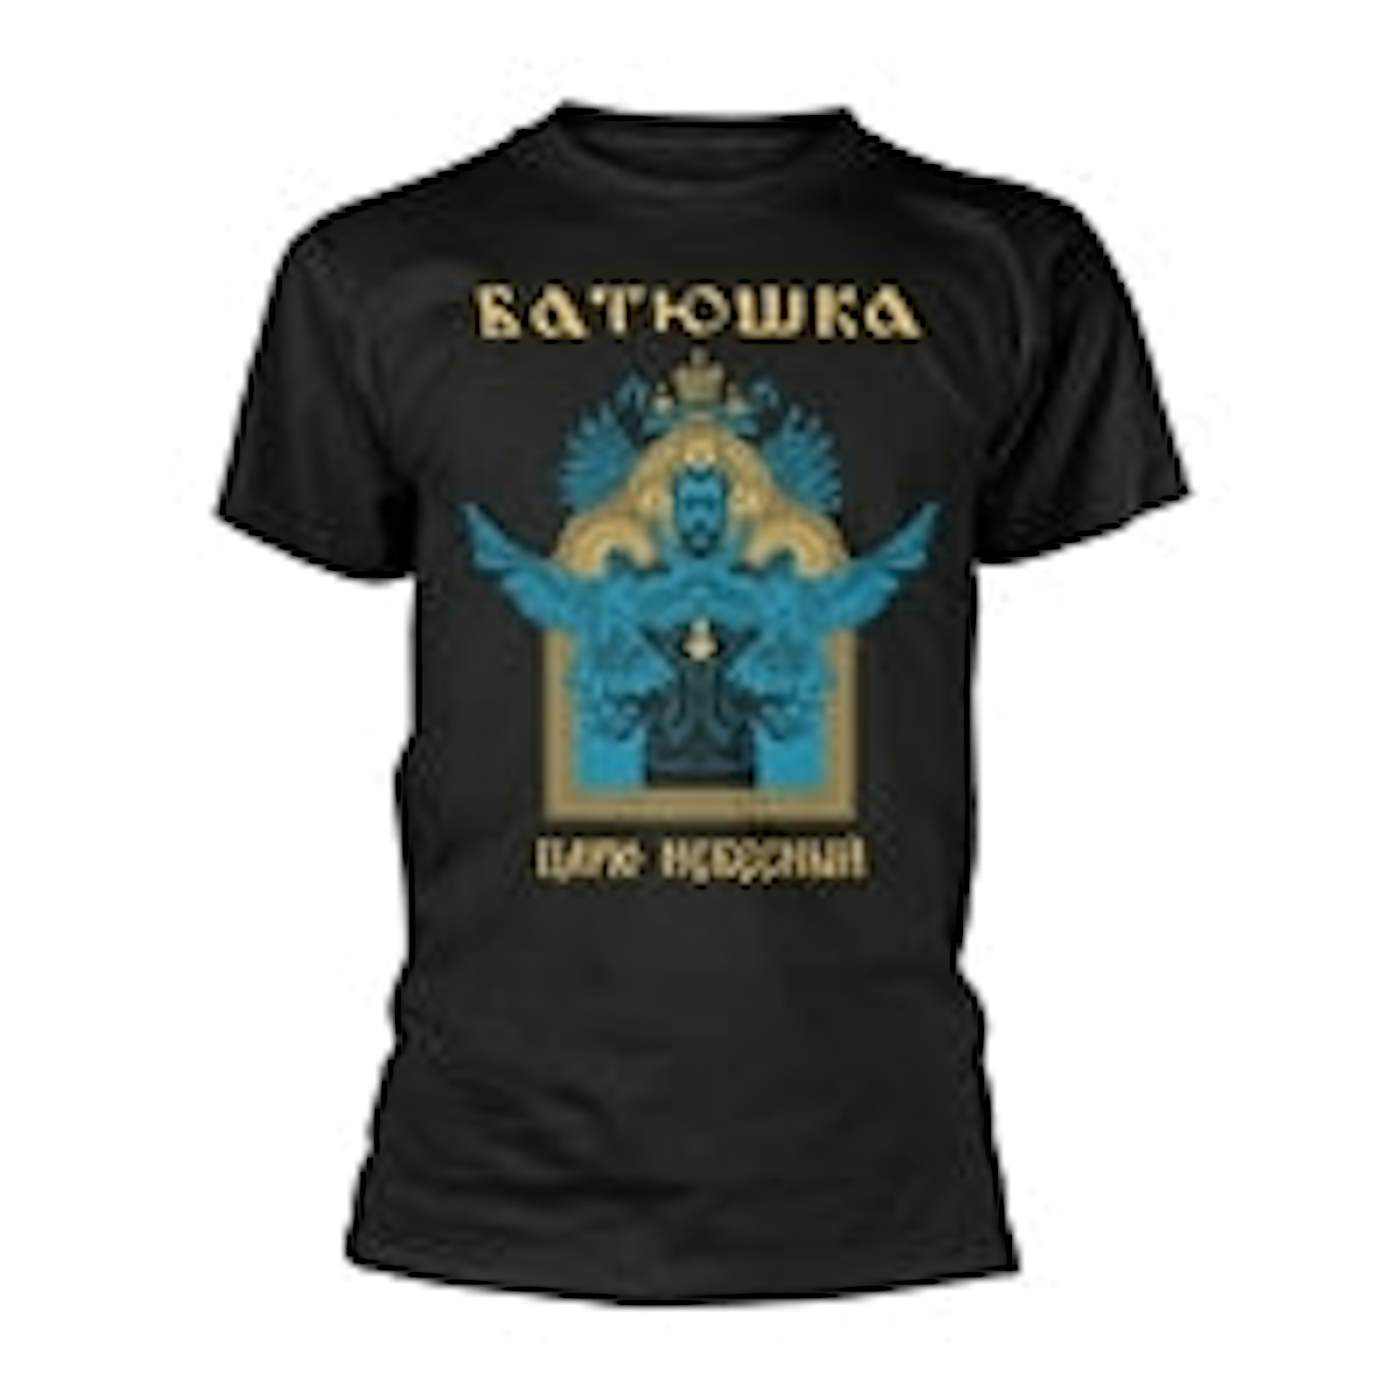 Batushka T Shirt - Carju Niebiesnyj (Black)